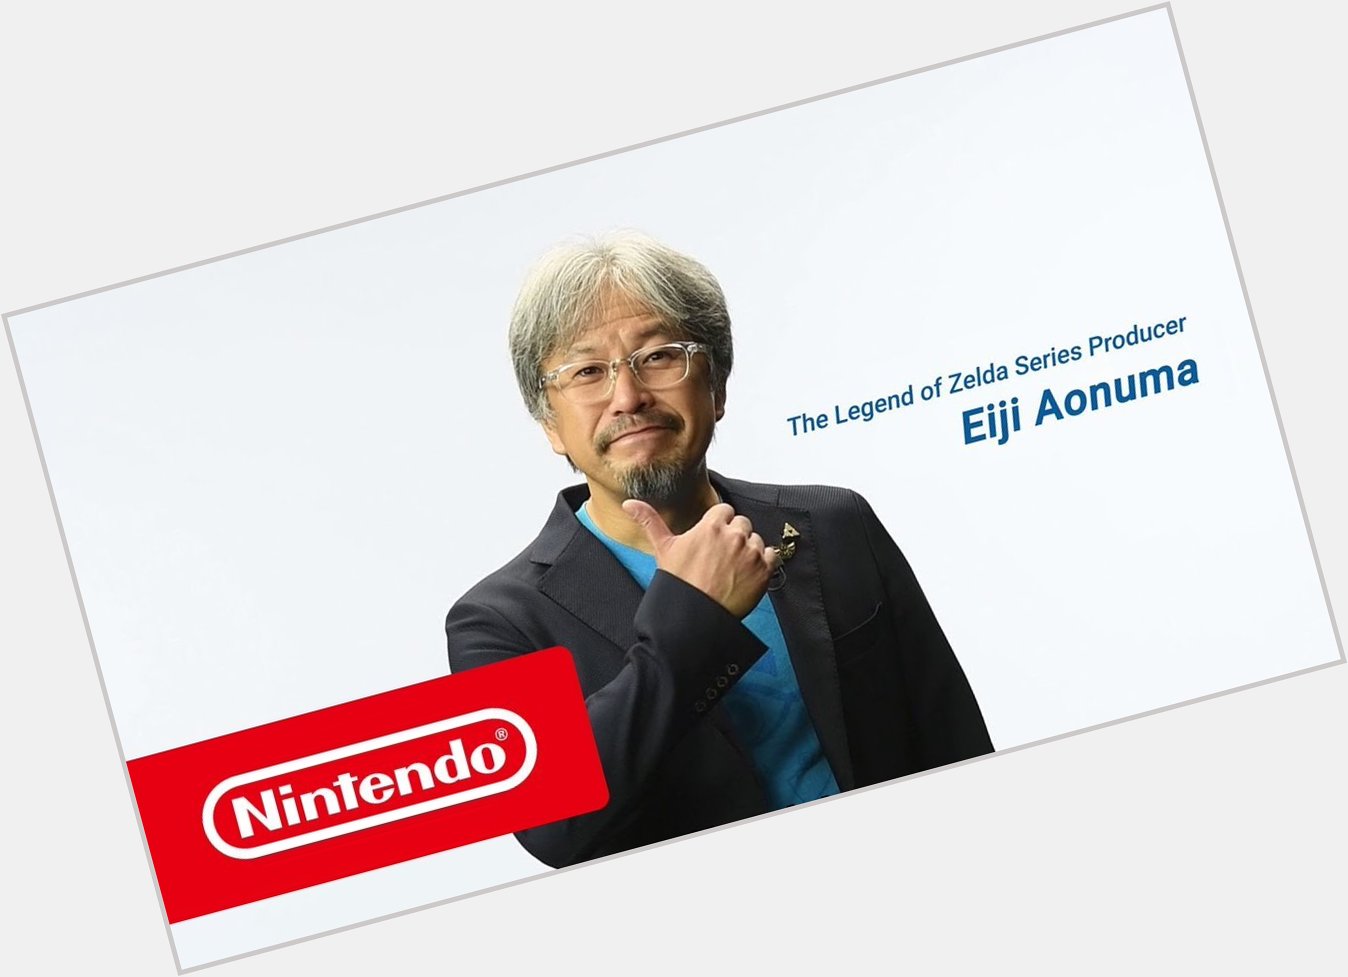 Happy Birthday Series Producer Eiji Aonuma! 
A true Nintendo Legend! 